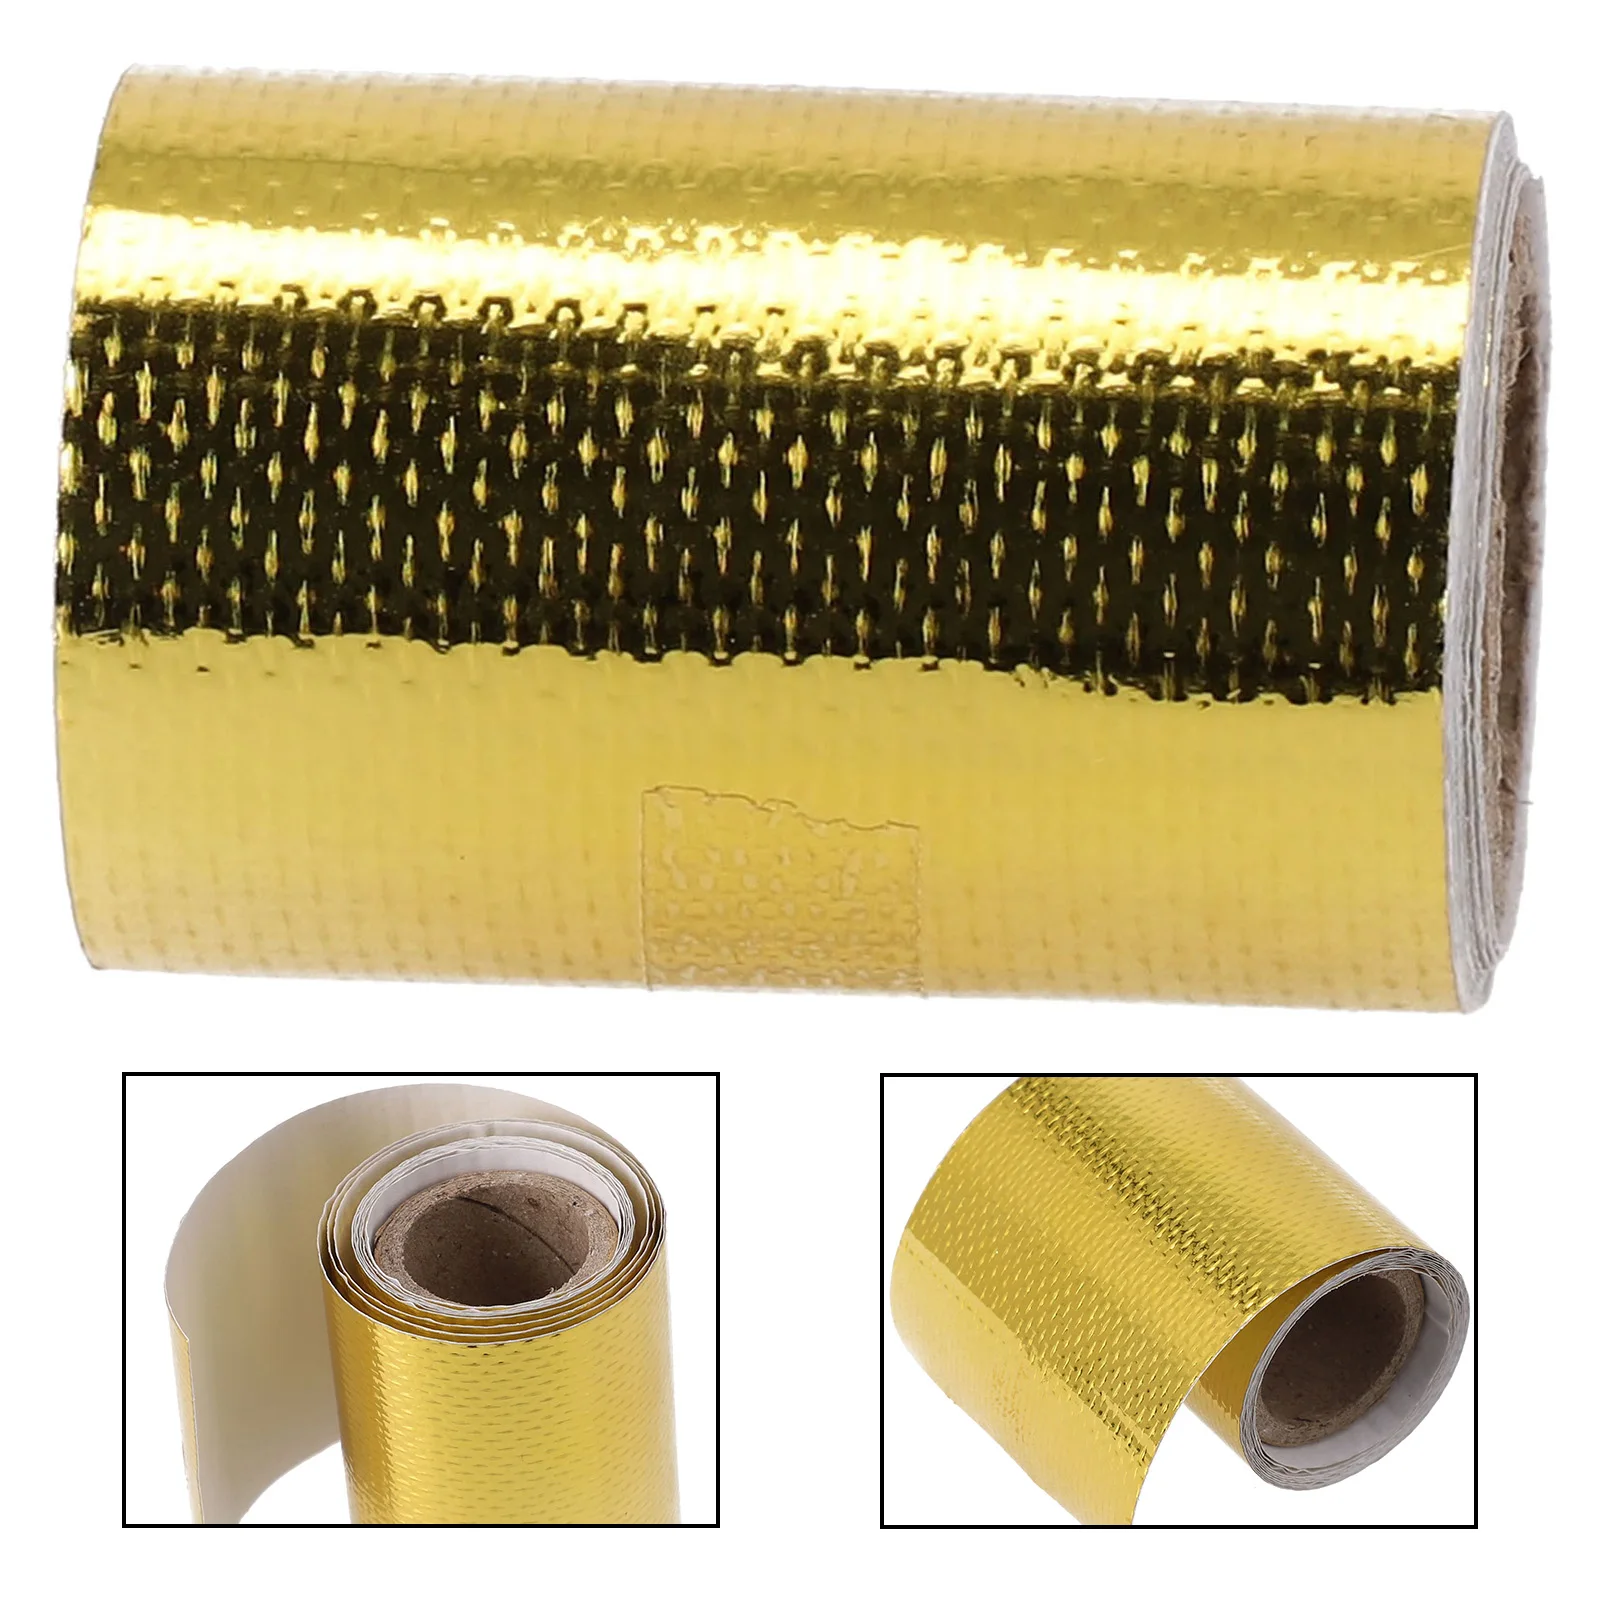 

100 X 5cm Heat Shield Wrap Tape 2021 Air Intake Fiberglass Gold Heat Insulation High Temperature Insulation Tape Reflective